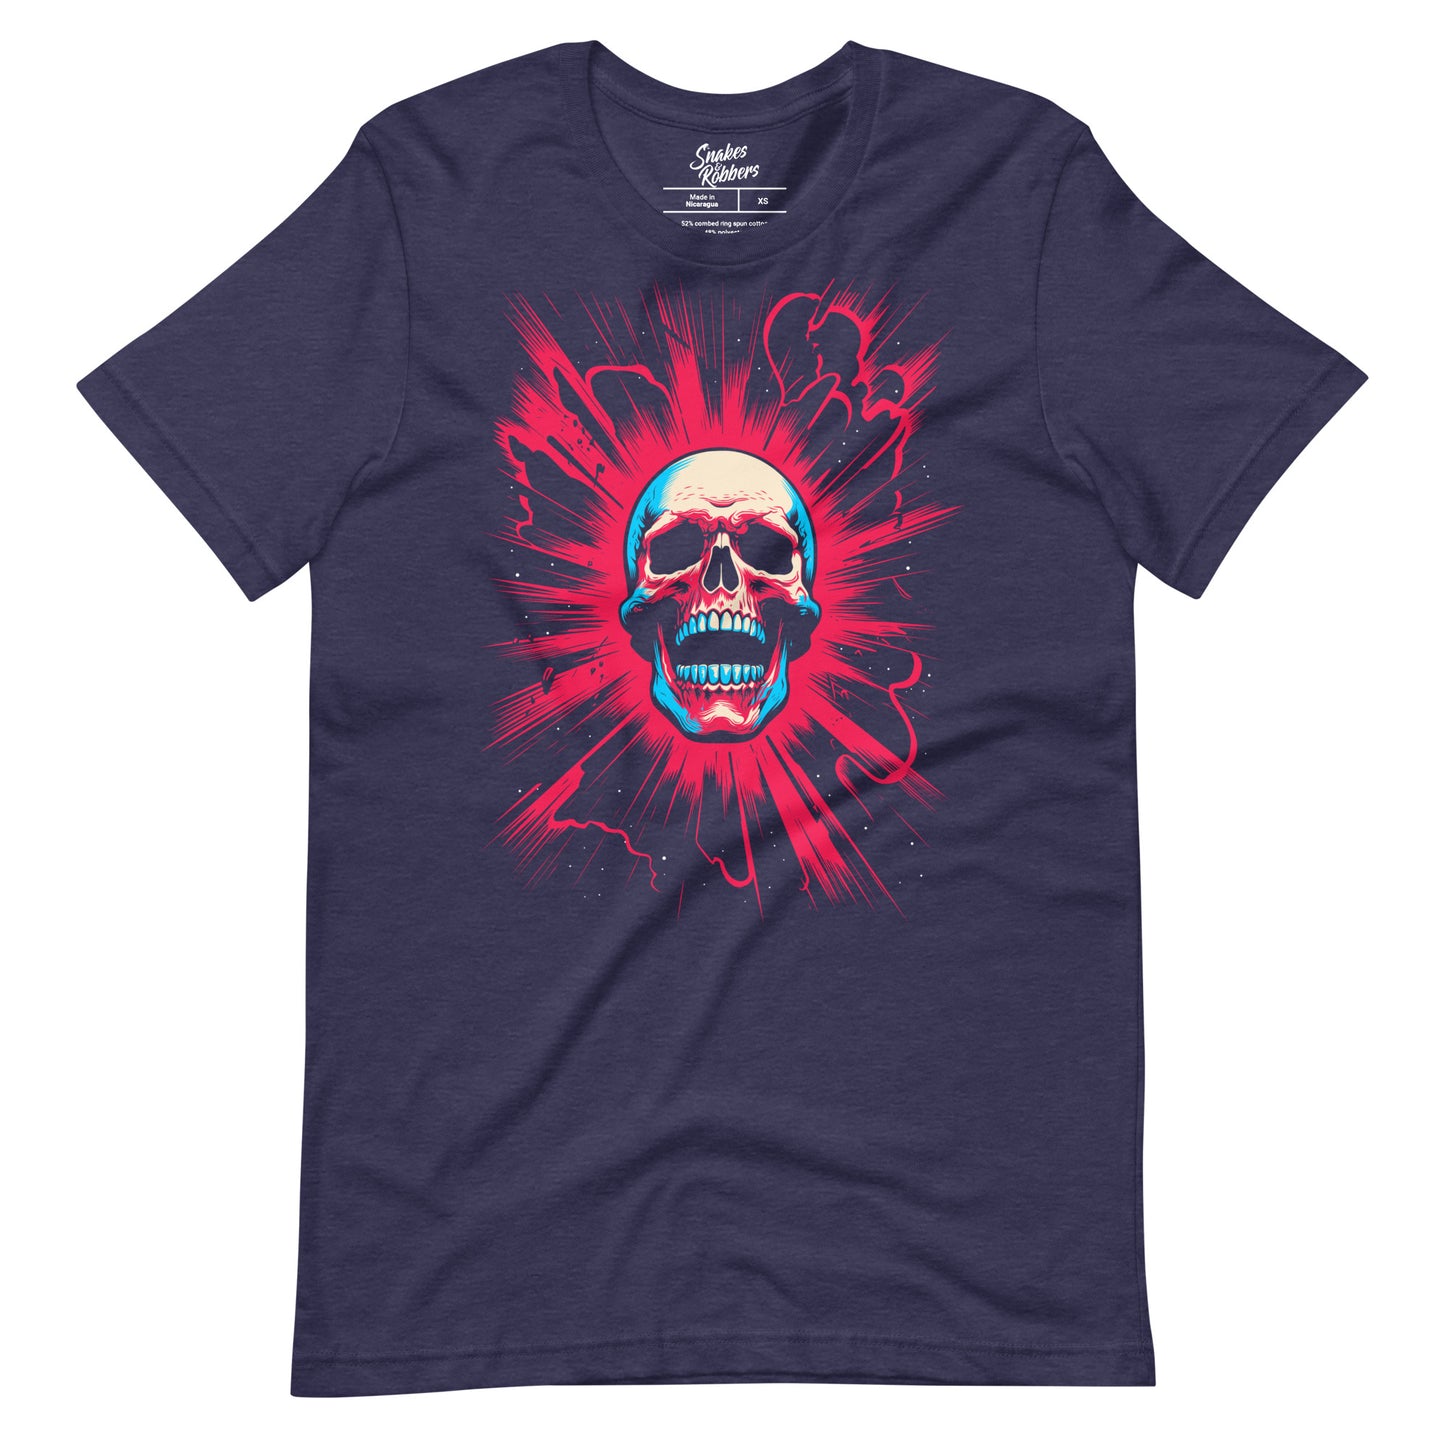 Cosmic Skull Unisex Retail Fit T-Shirt